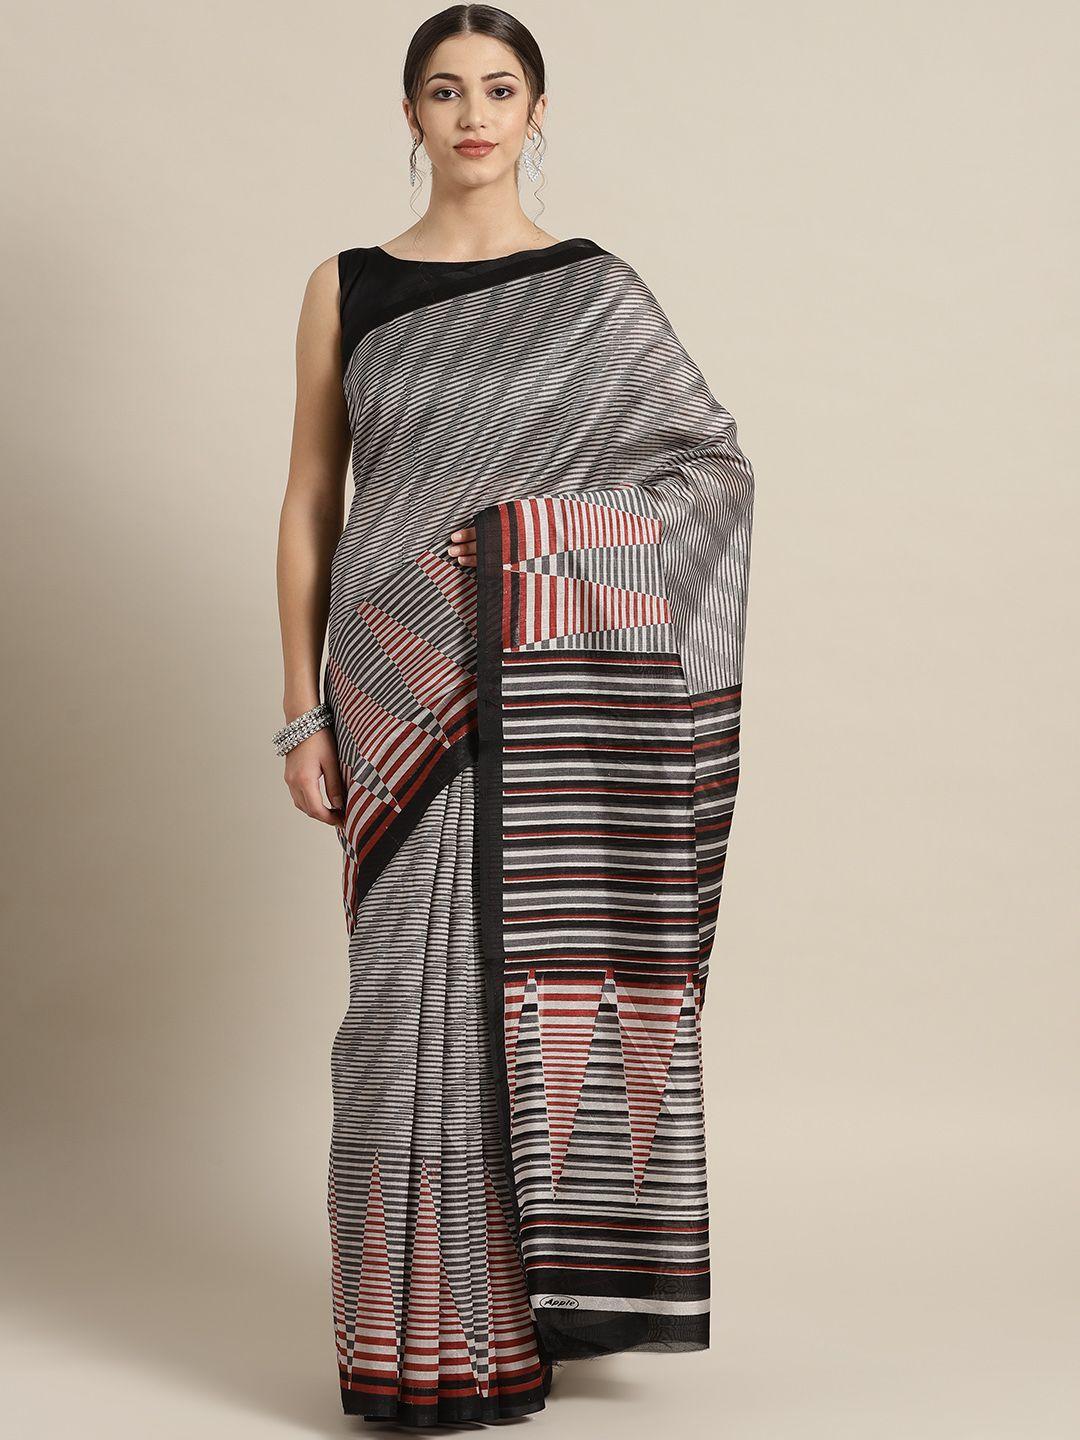 saree mall grey & black striped saree